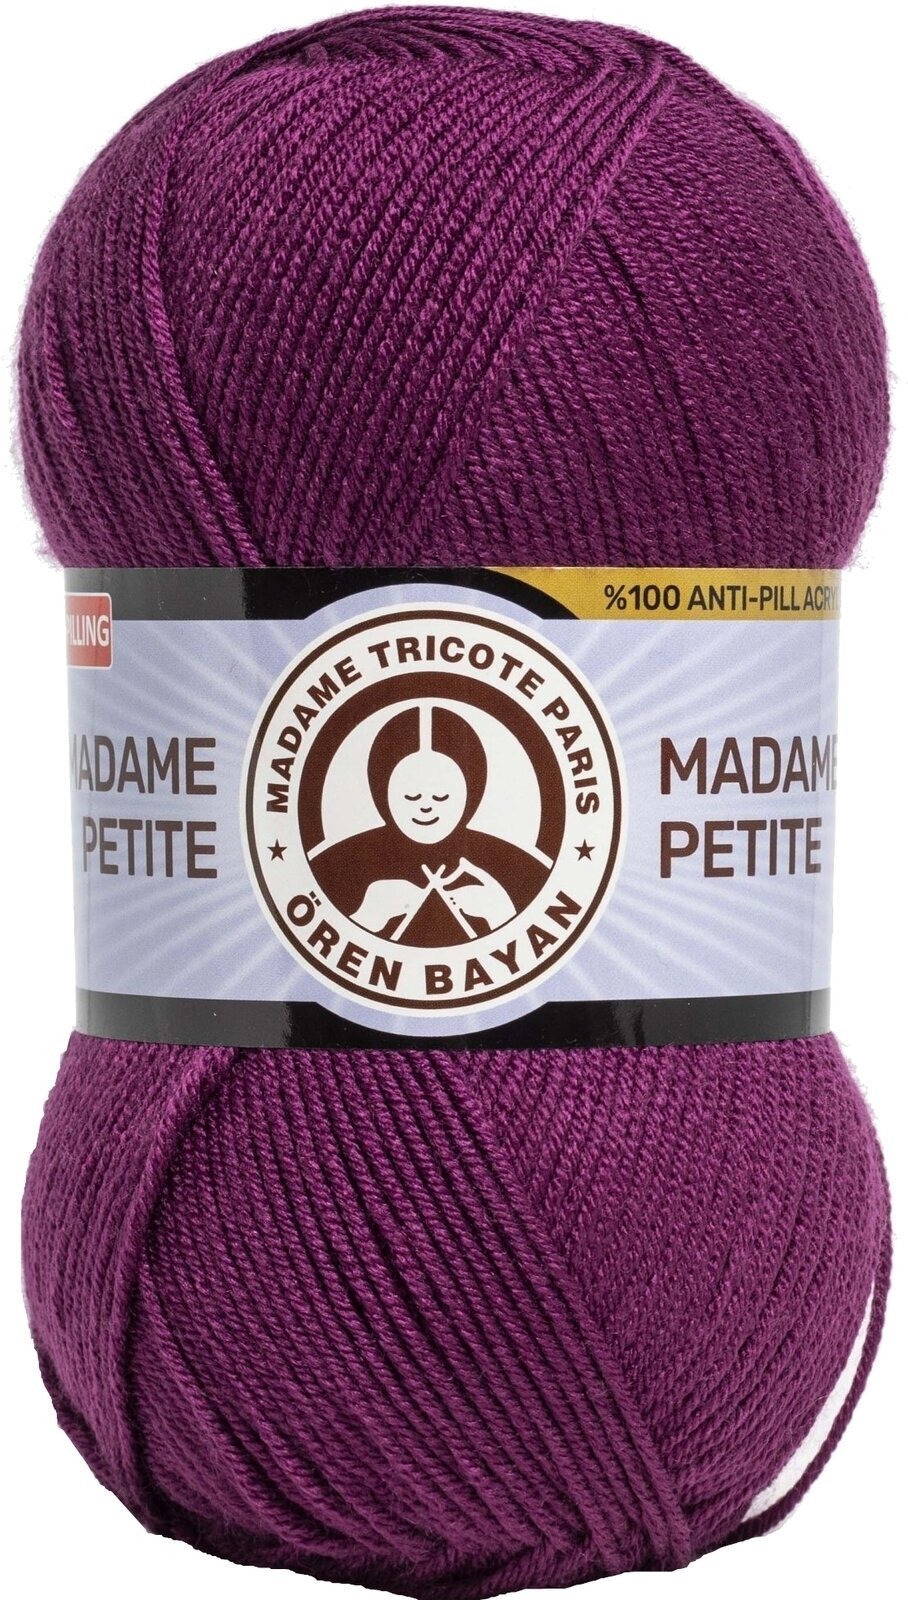 Neulelanka Madame Tricote Paris Madame Petite 3848 52 Neulelanka